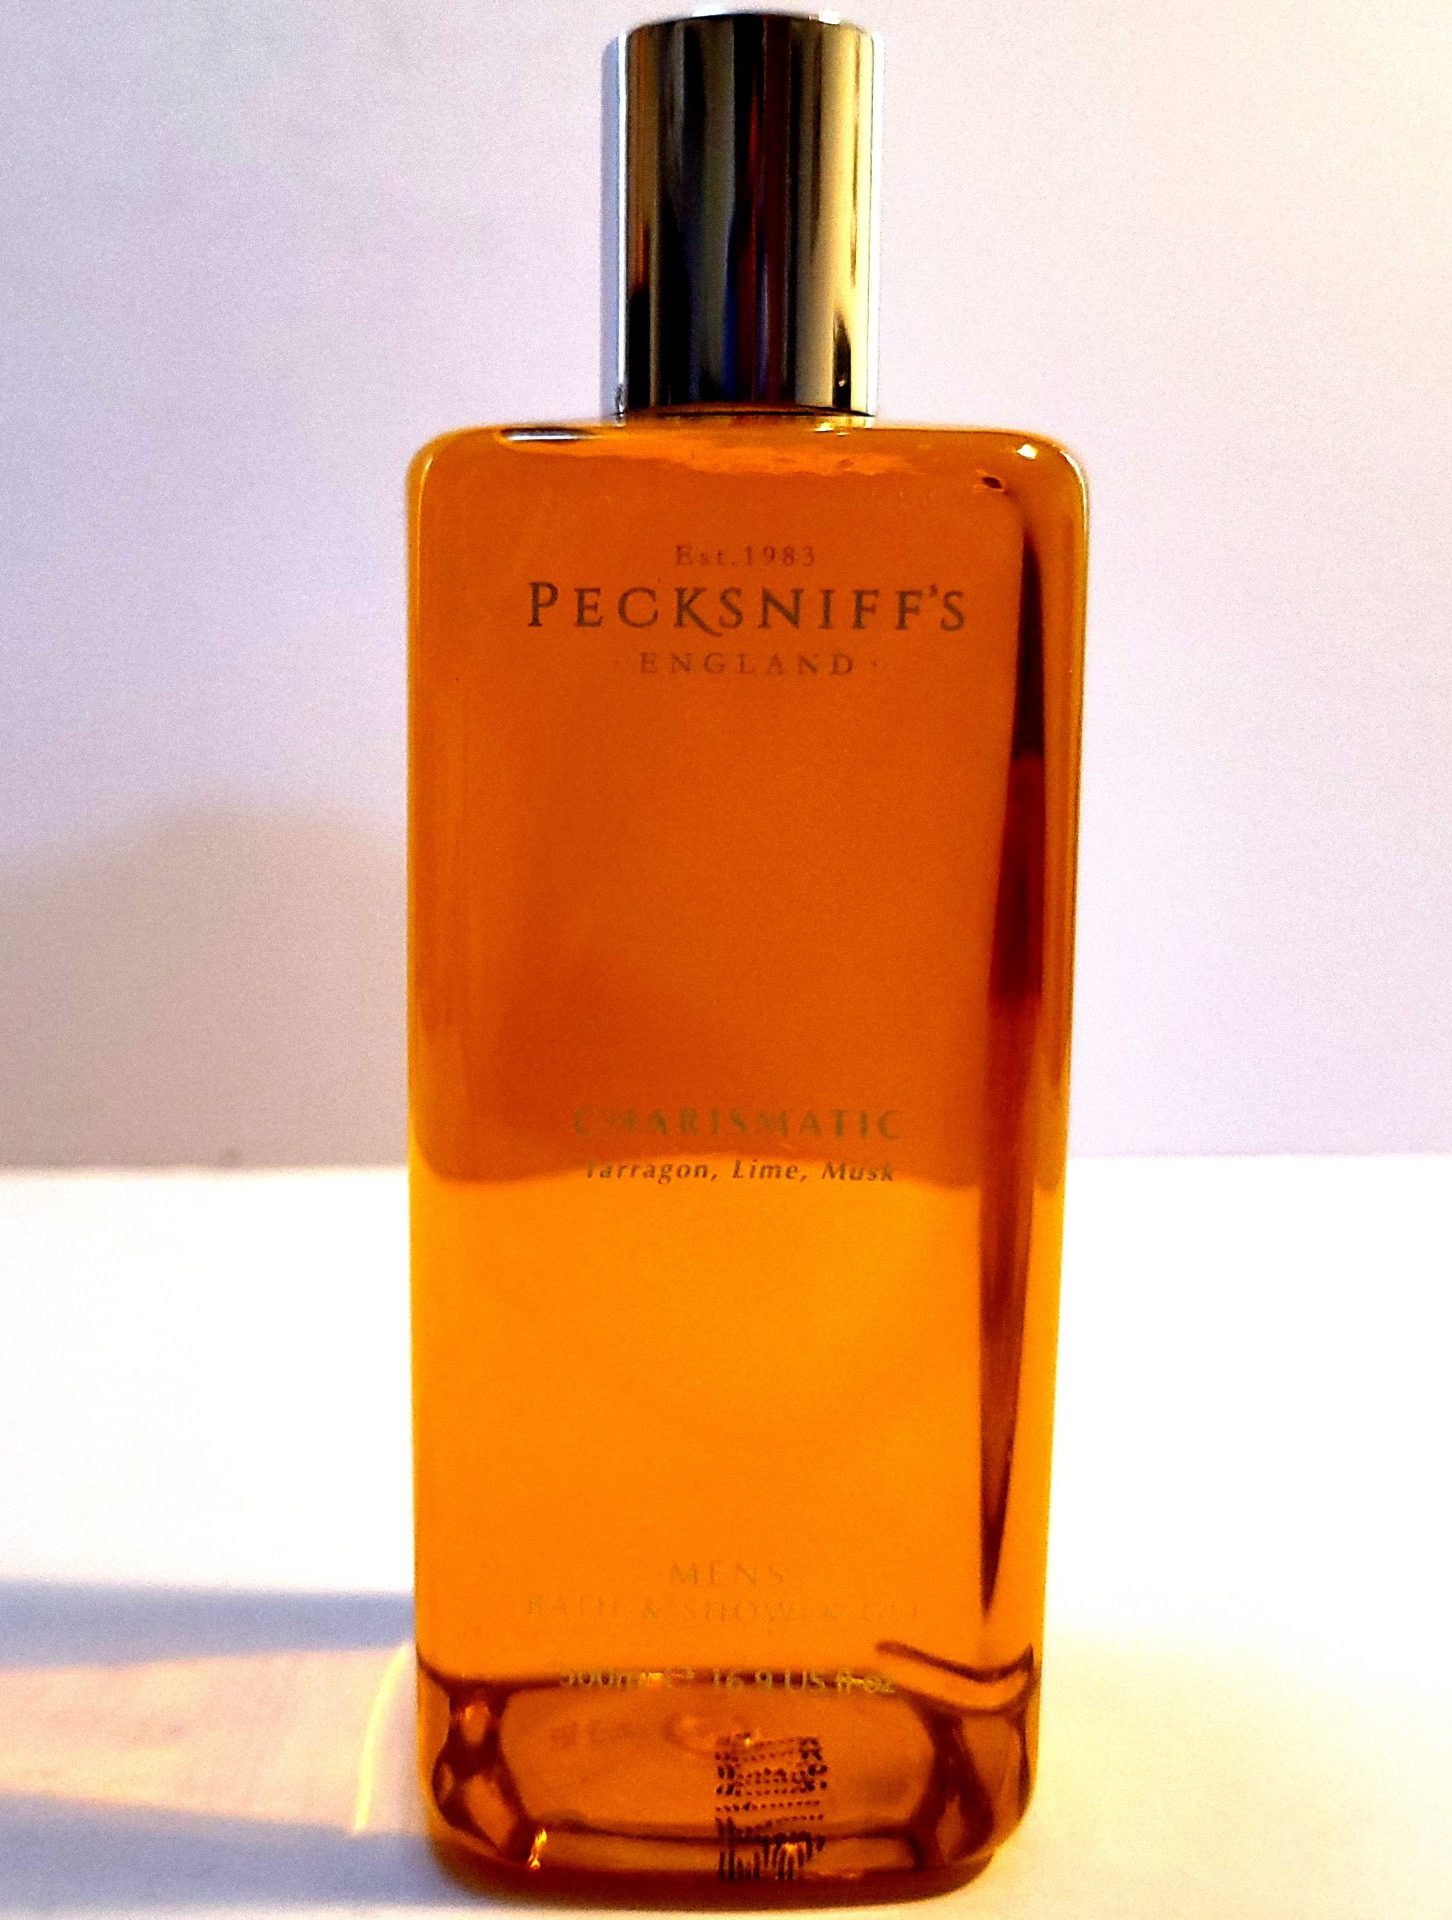 A bottle of Pecksniffs Charismatic Mens Bath & Shower Gel, 500ml on a white surface.